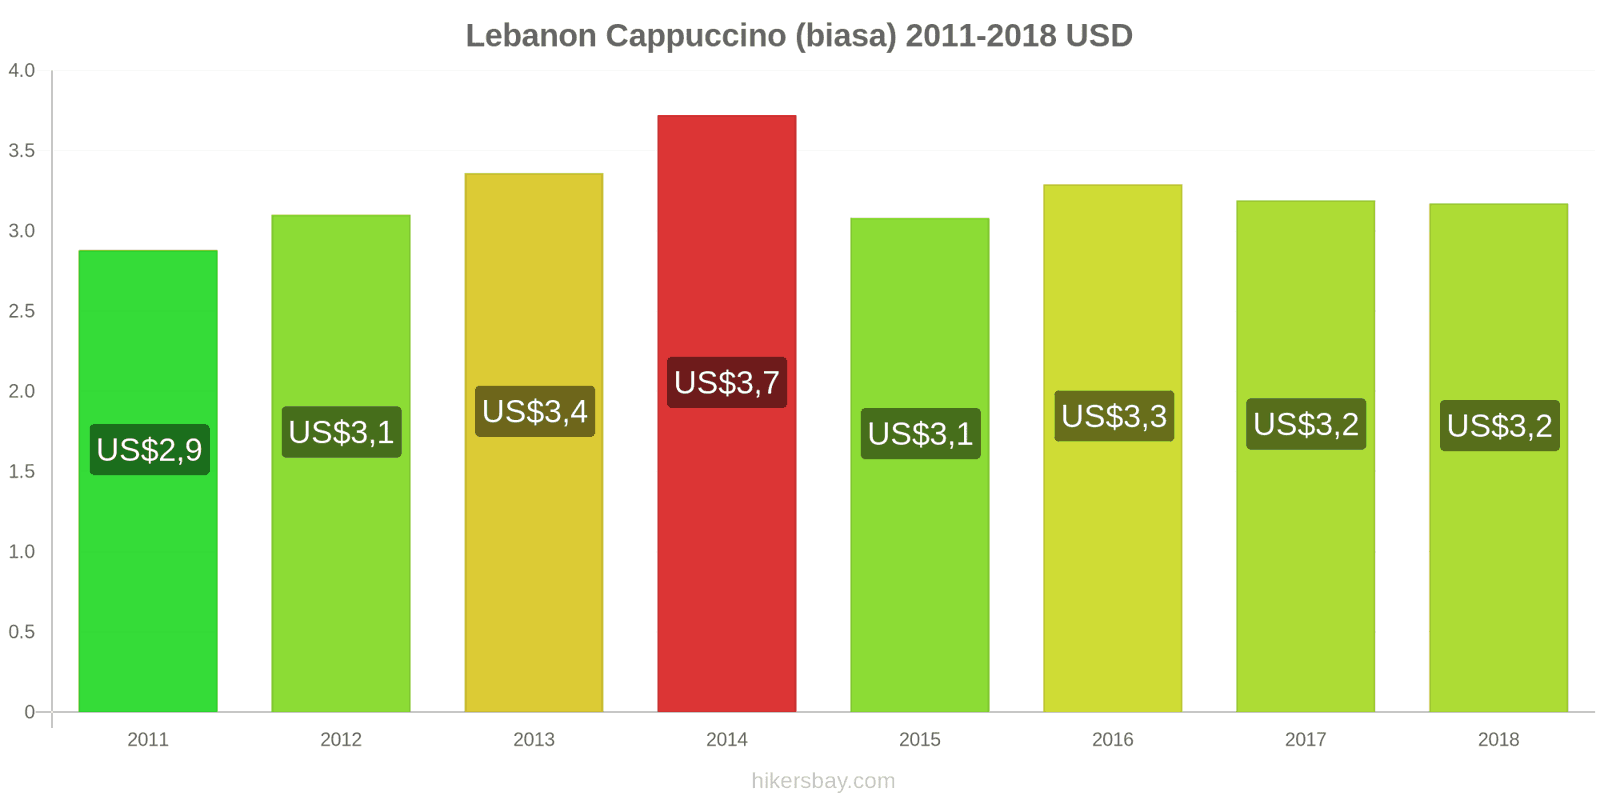 Lebanon perubahan harga Cappuccino hikersbay.com